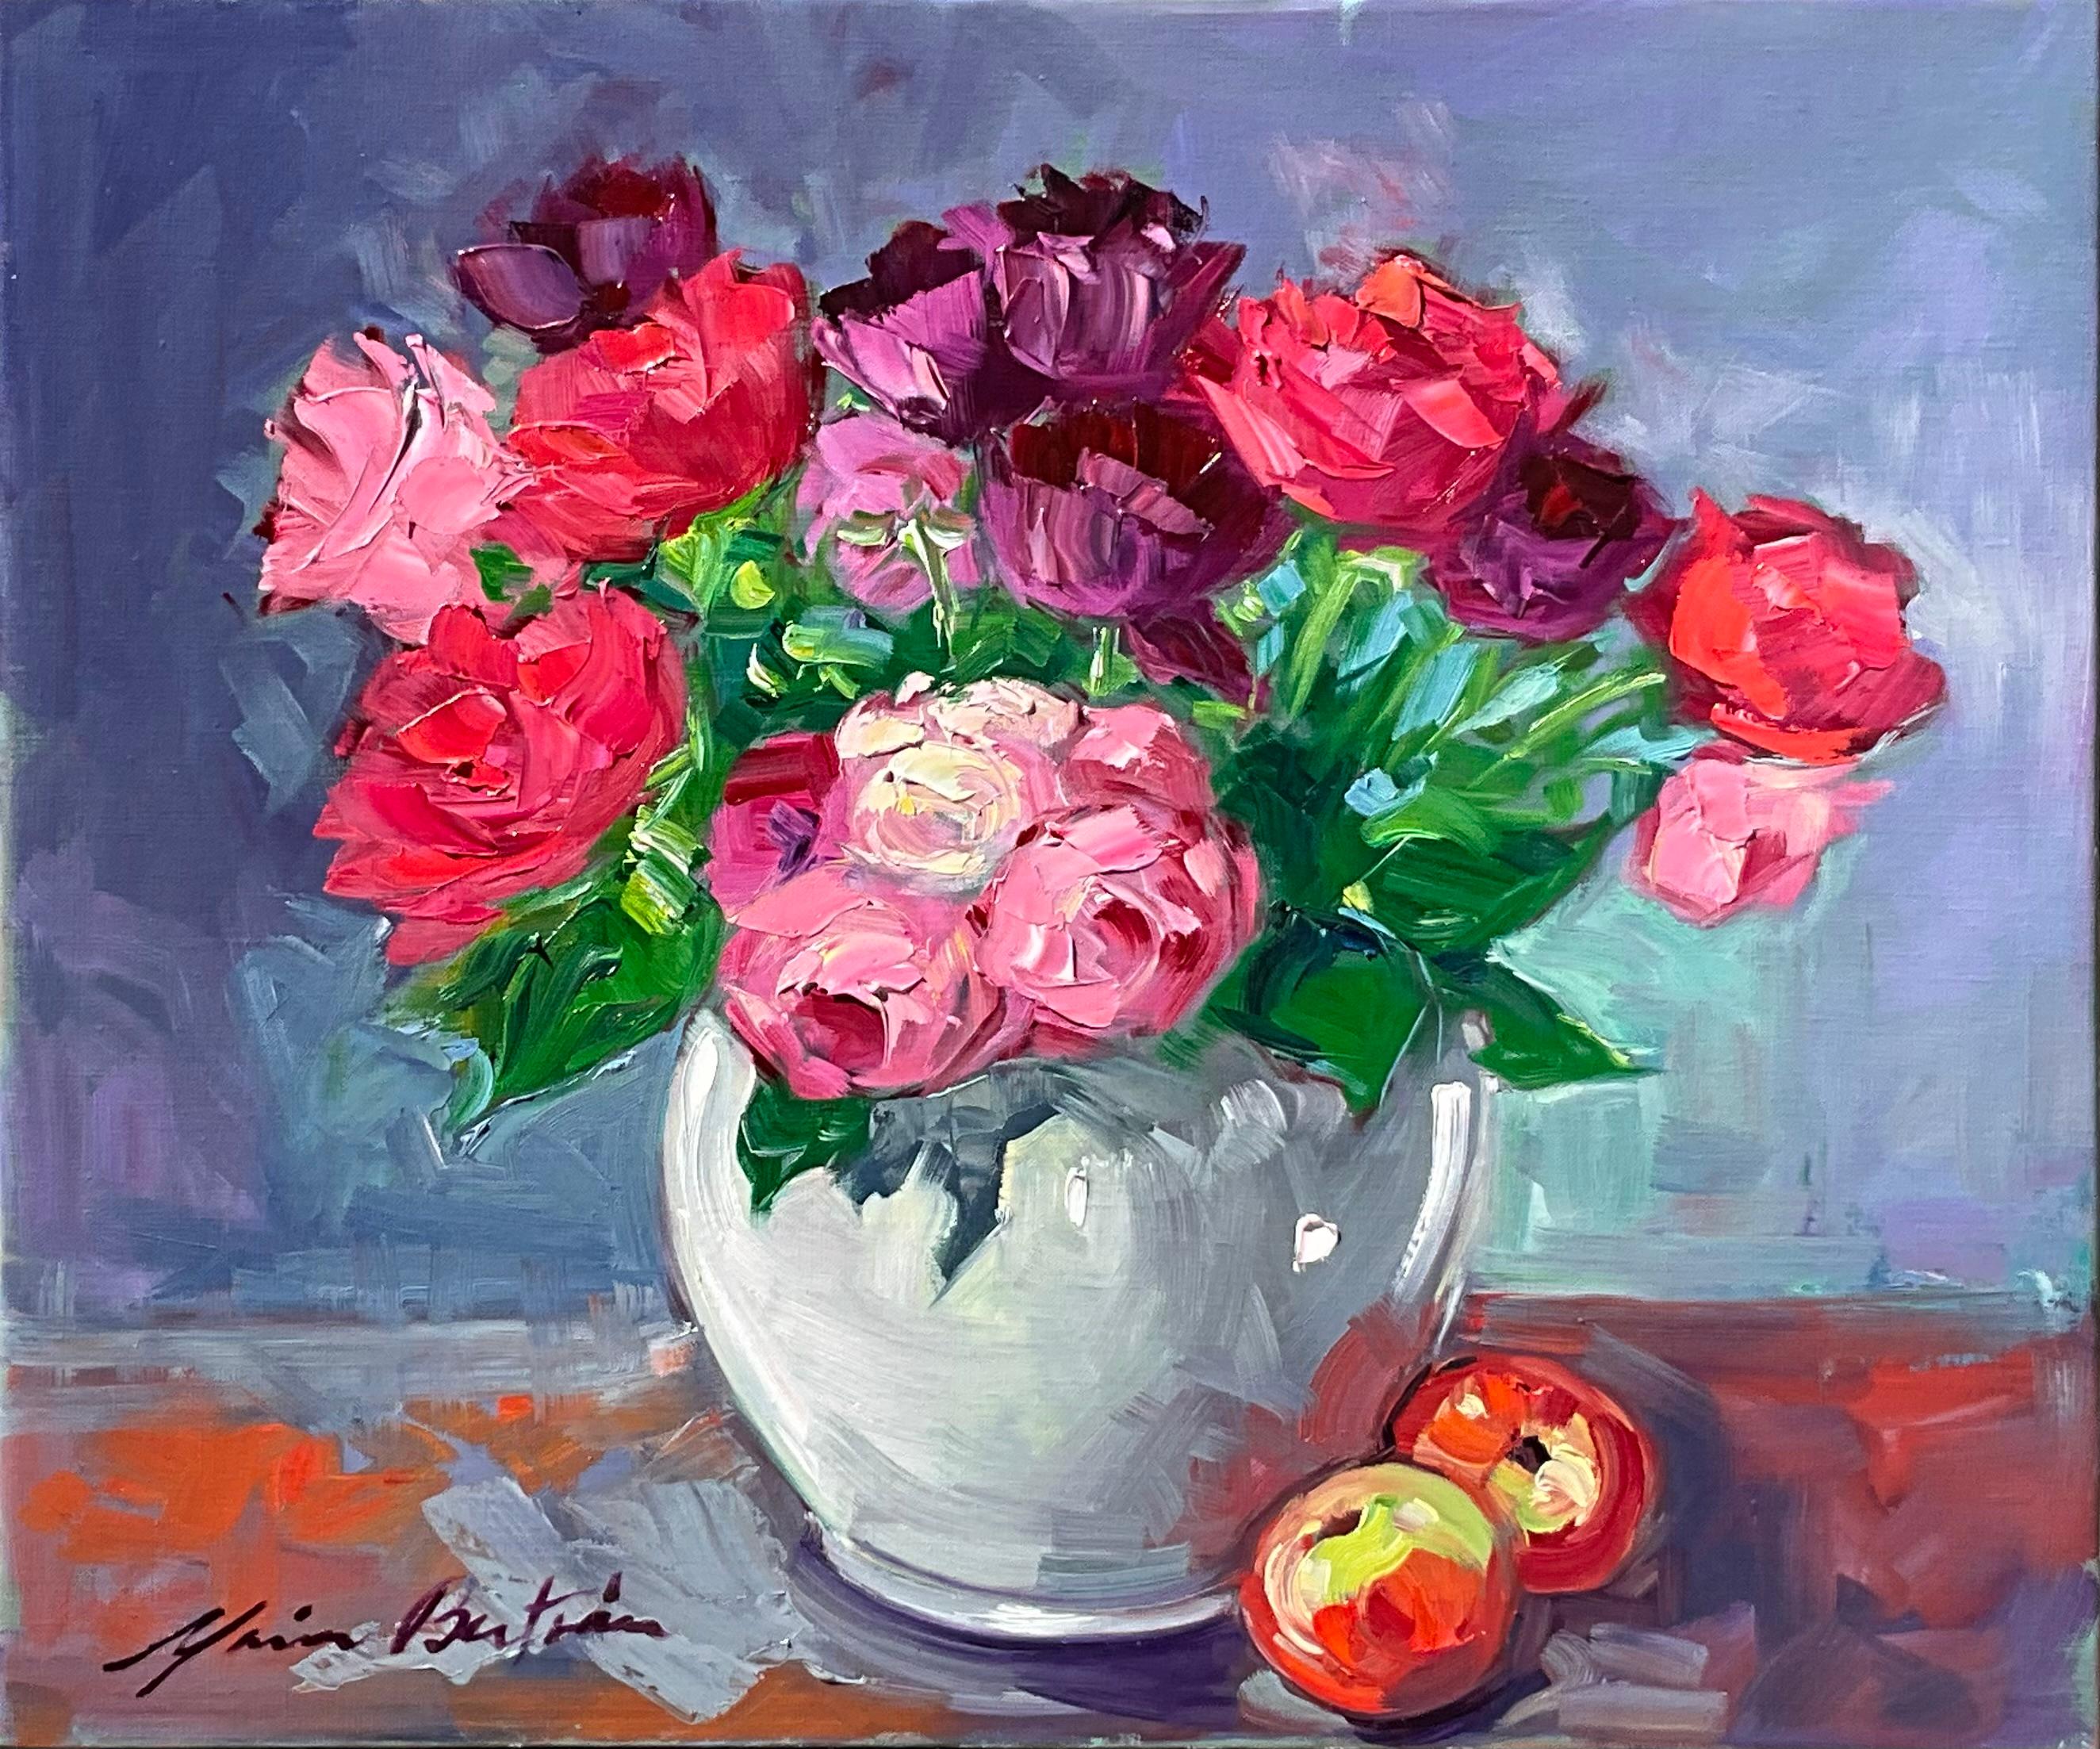 Still-Life Painting Maria Bertrán - "Roses et tulipes" Nature morte impressionniste contemporaine à l'huile